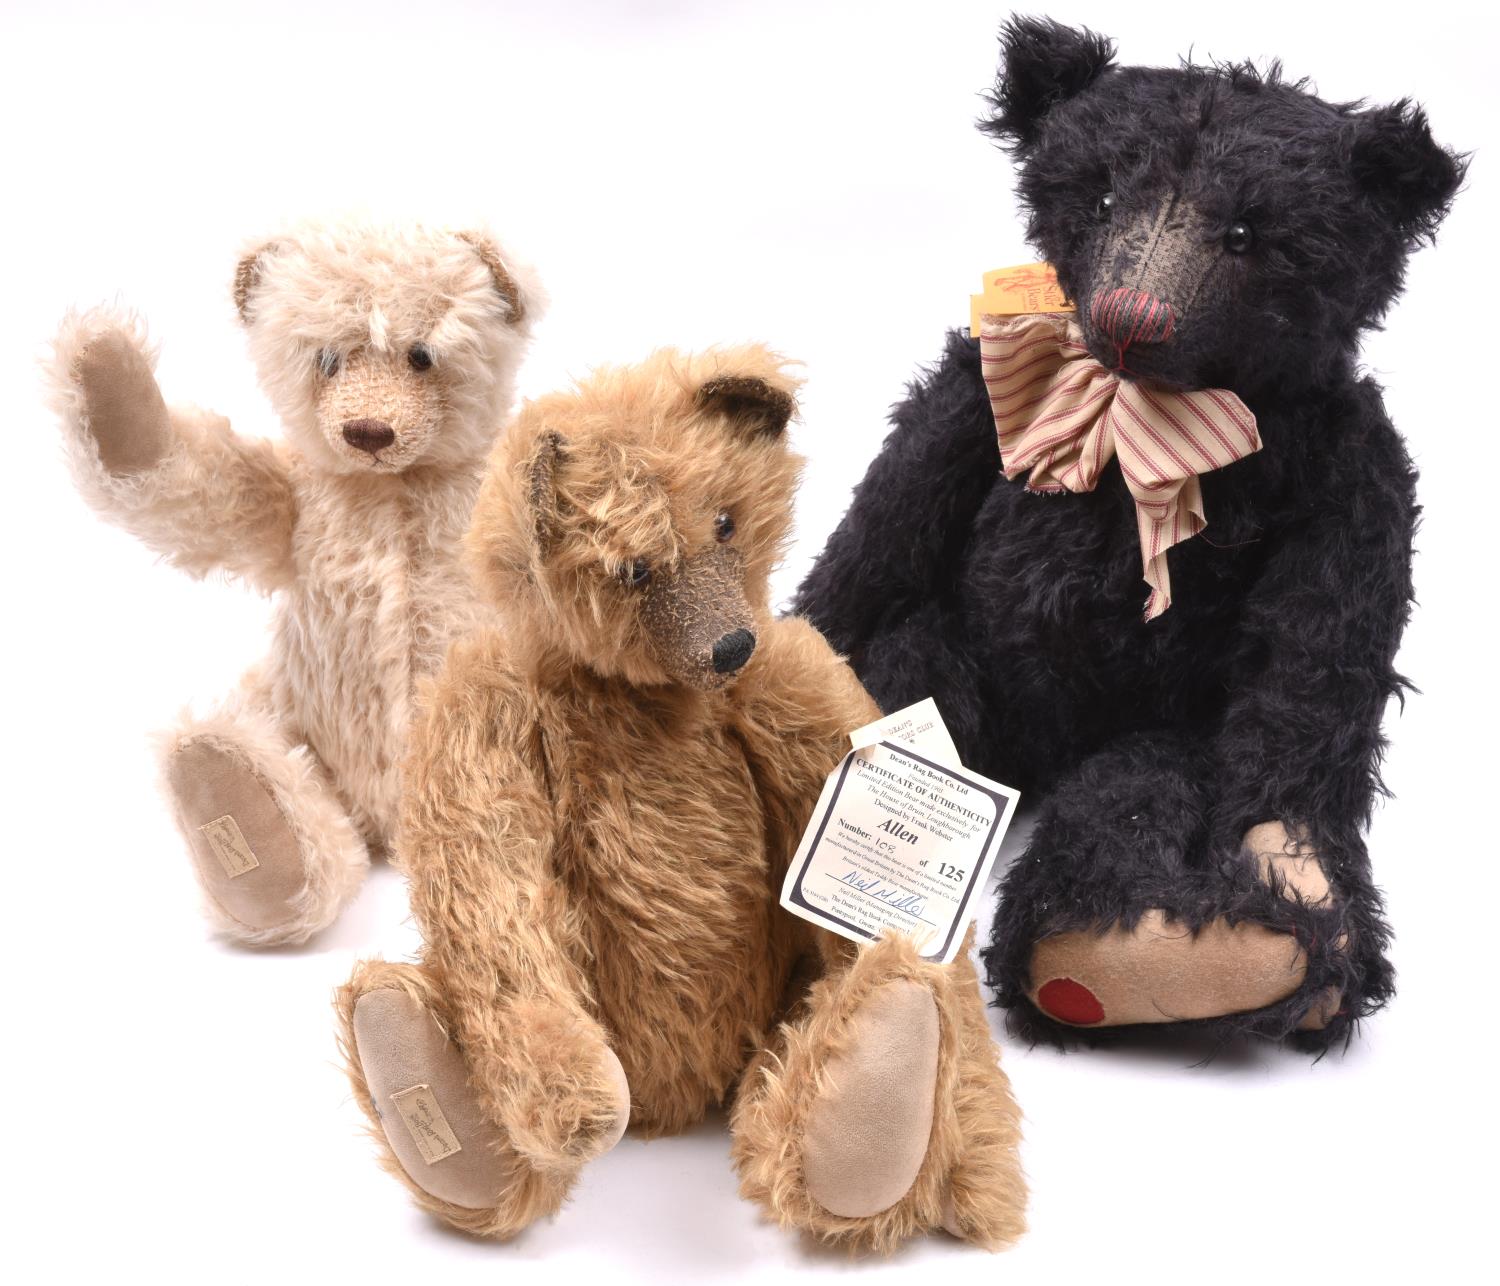 3x Teddybears. 2x Dean's Rag Book Co. Ltd. and a Stier Bears by Kathleen Wallace. All with